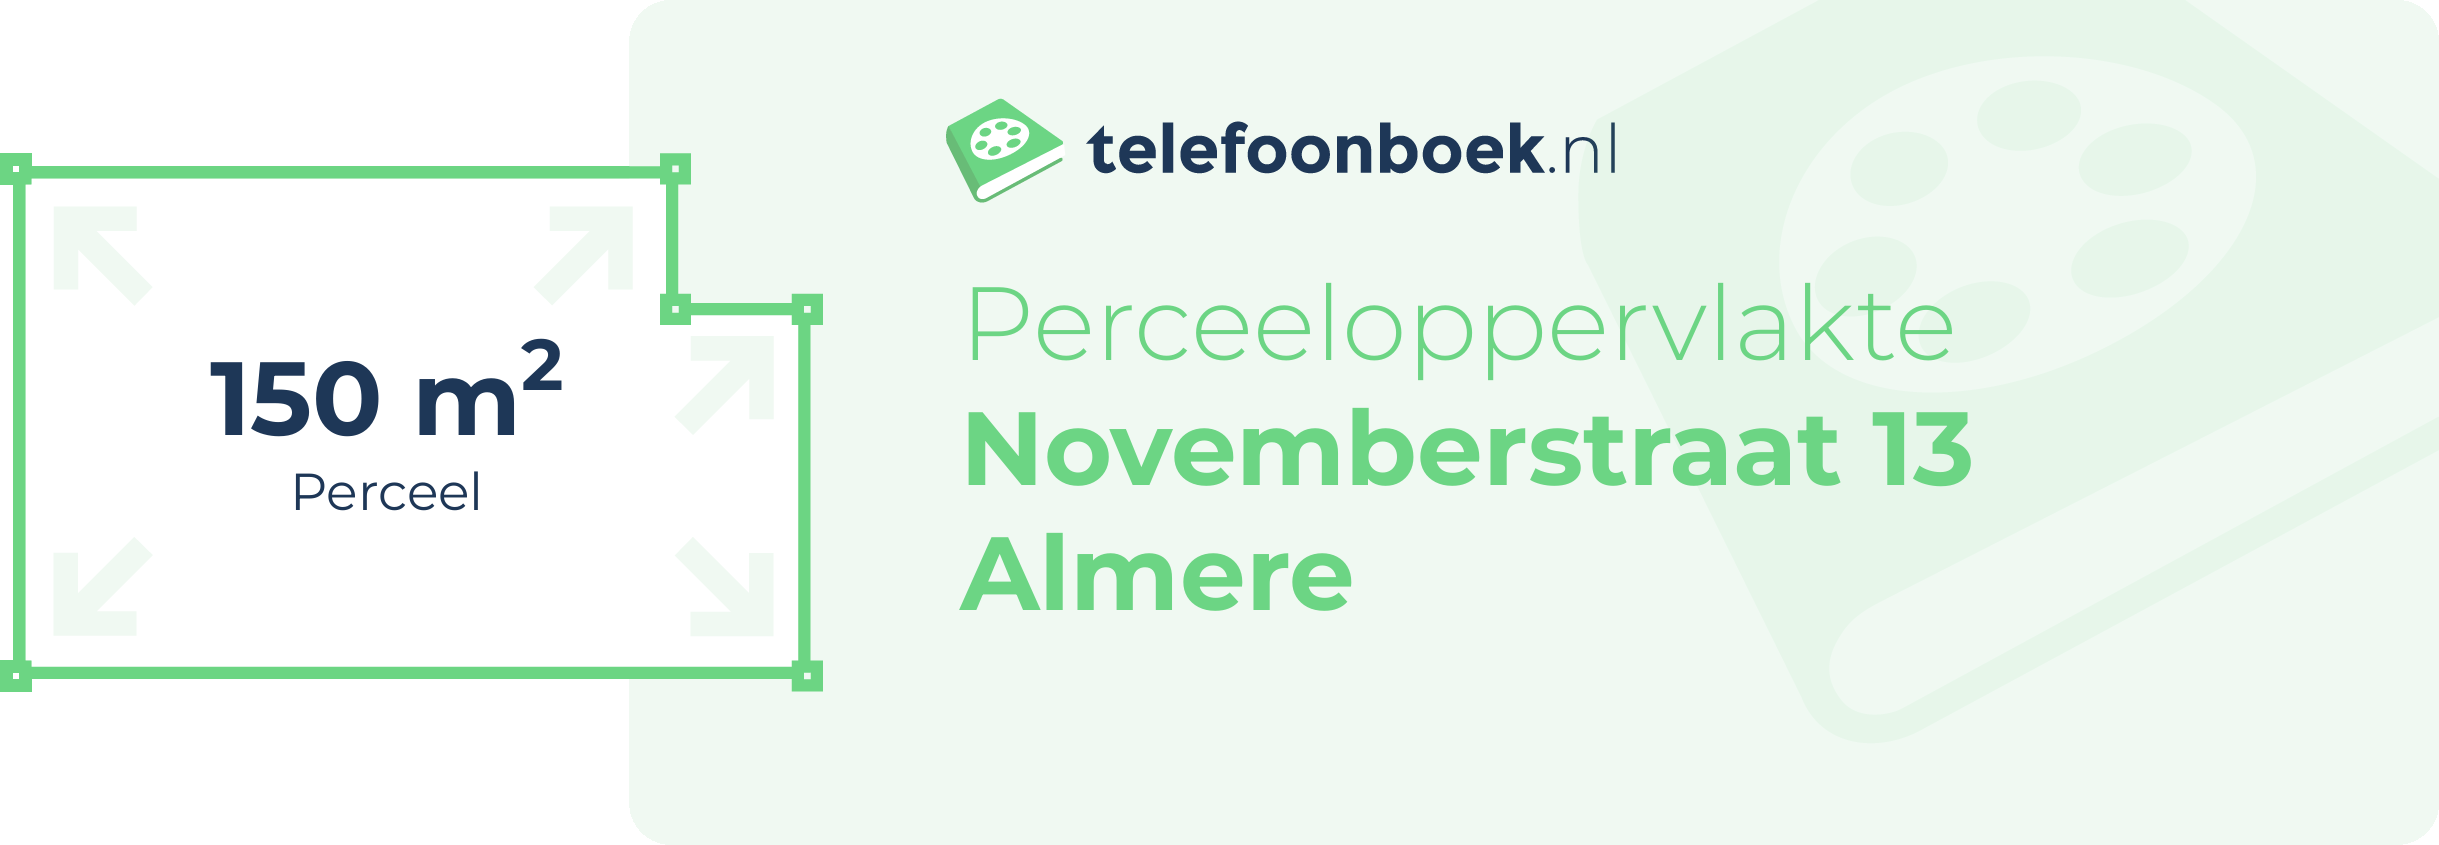 Perceeloppervlakte Novemberstraat 13 Almere